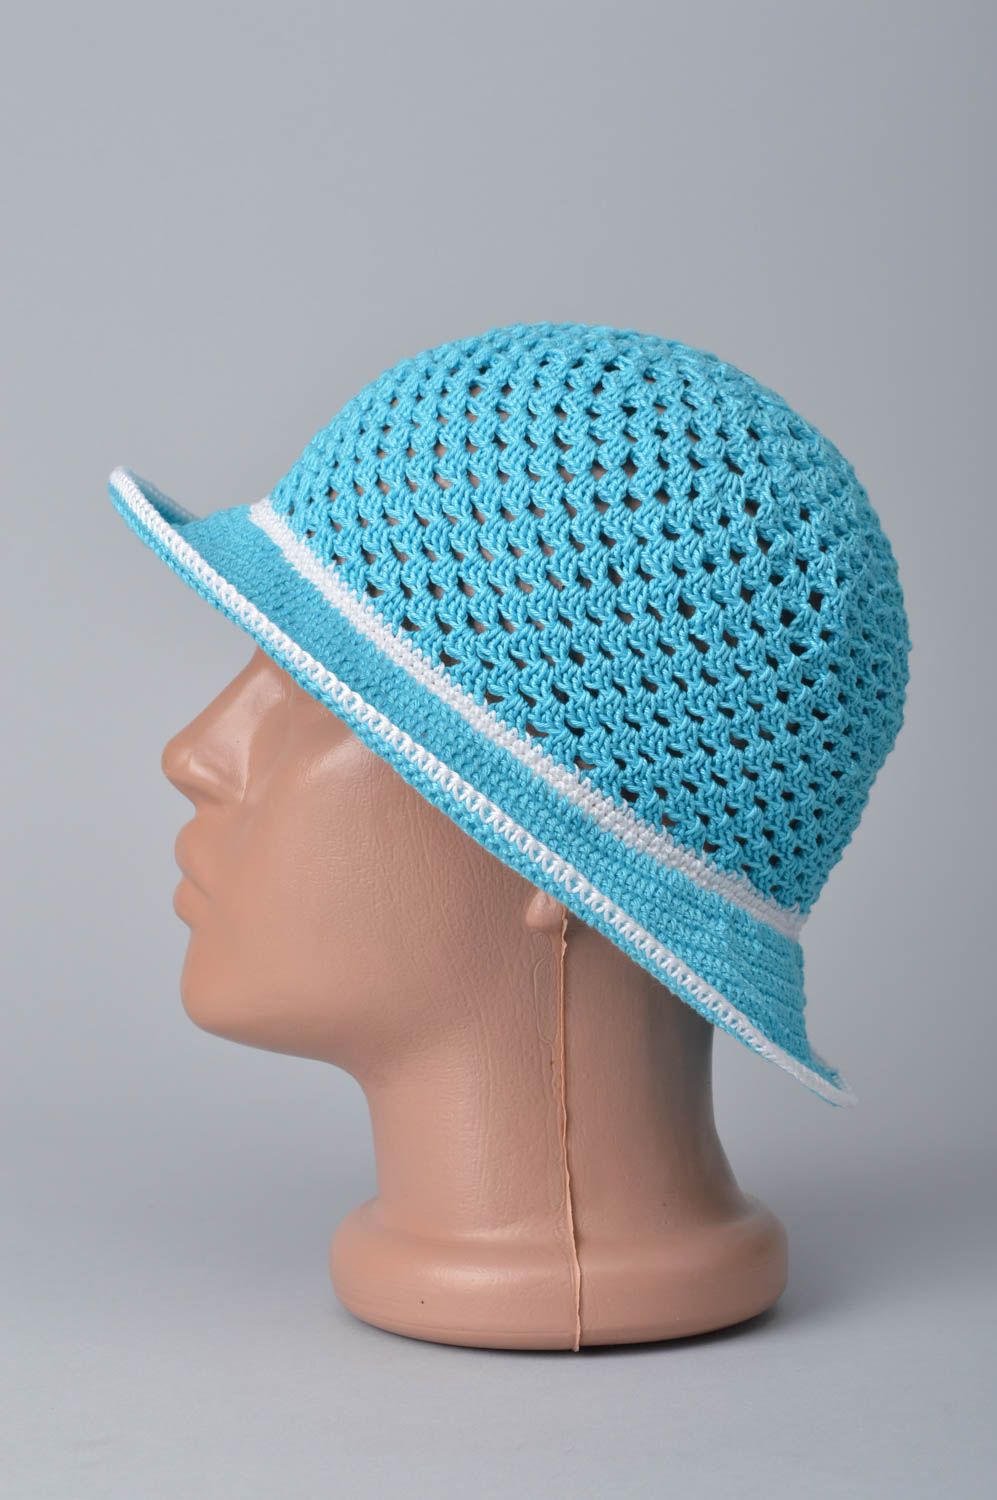 Unusual handmade crochet hat crochet ideas accessories for girls cute hats photo 3